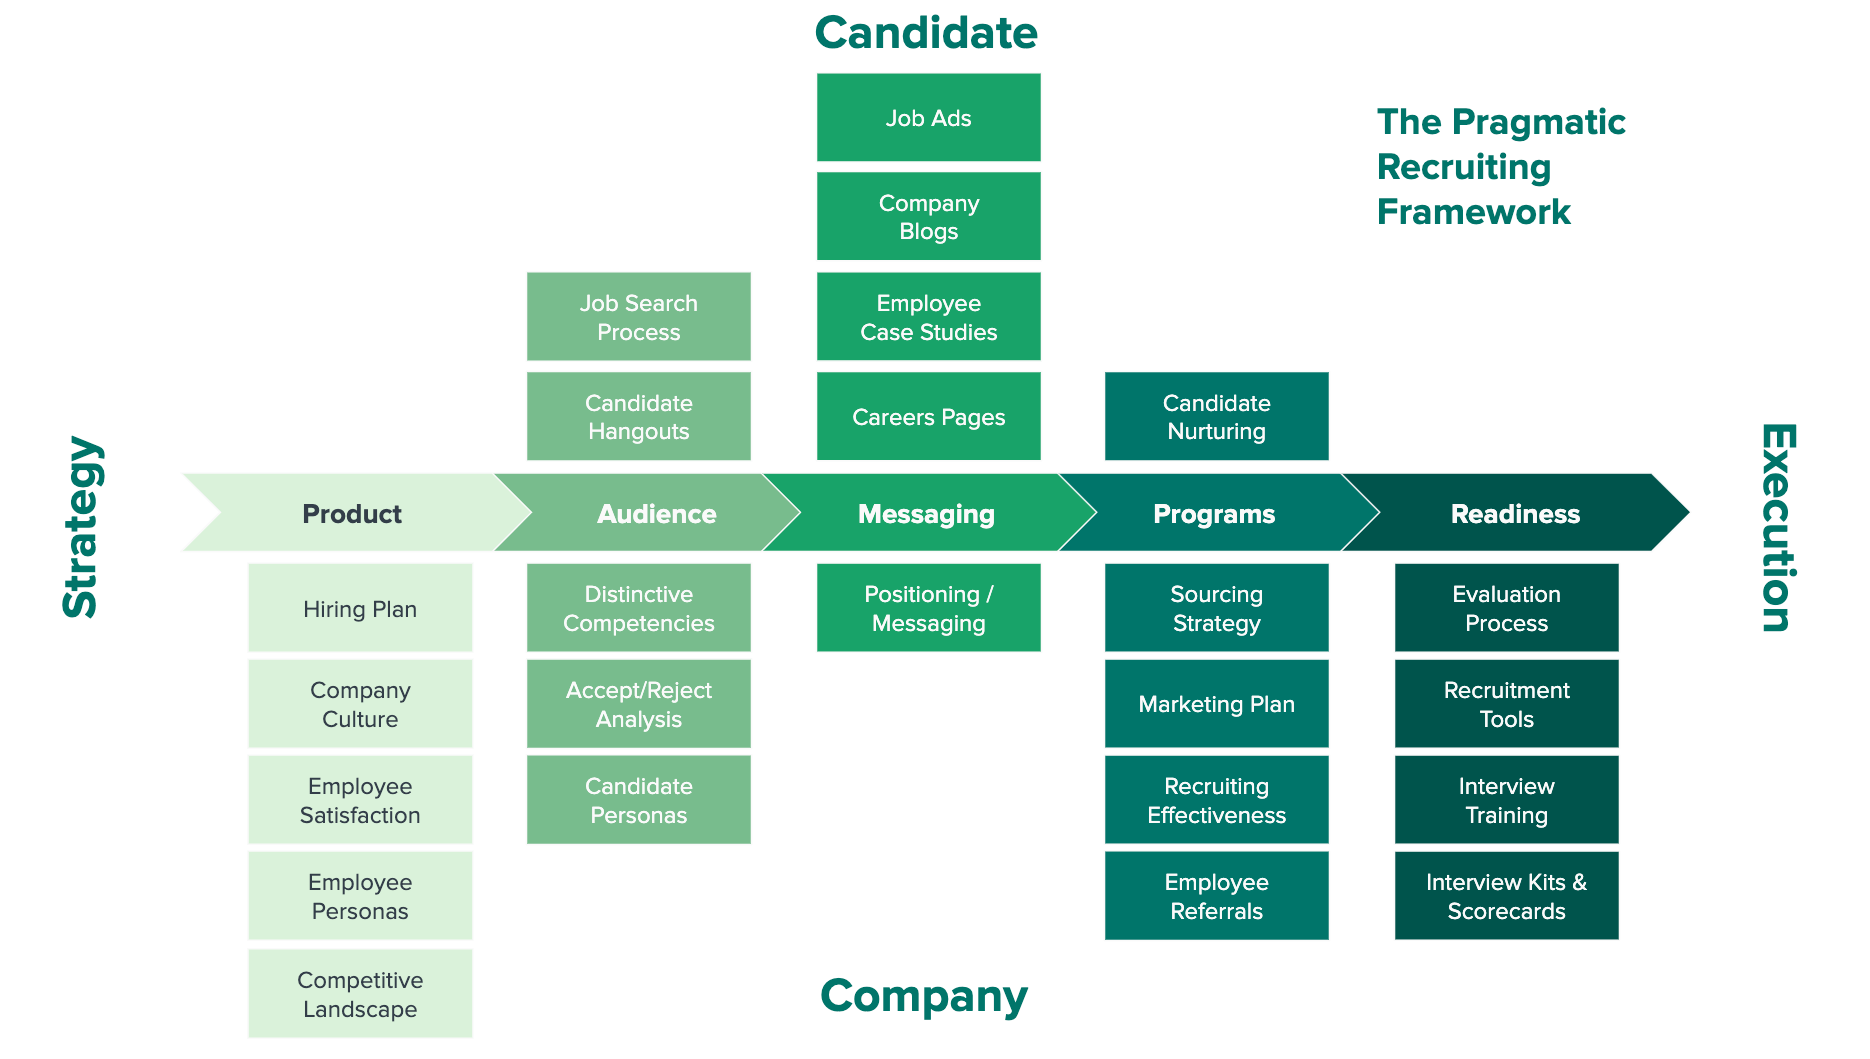 pragmatic recruiting framework